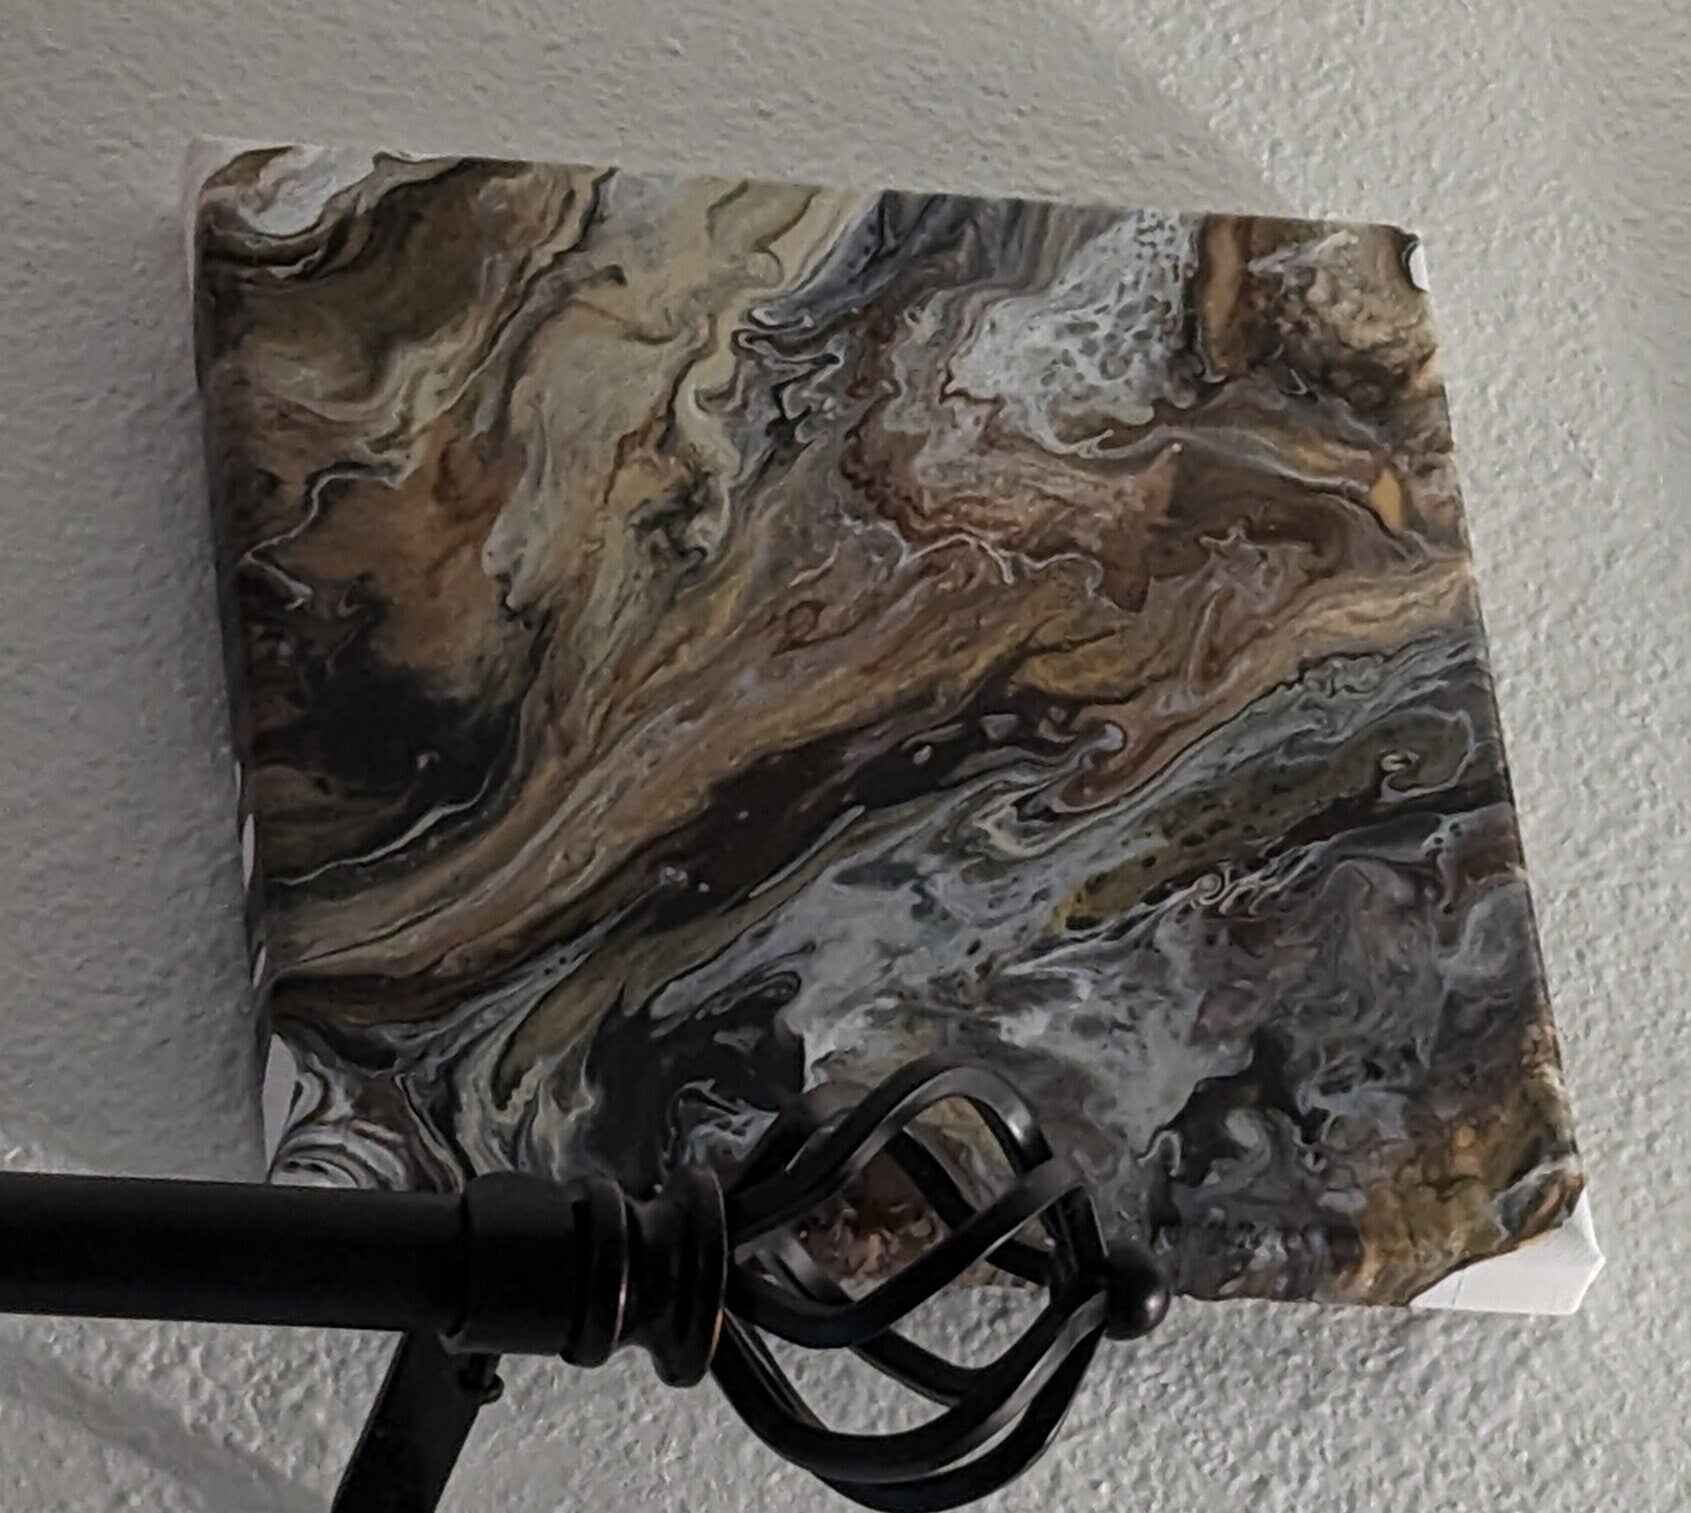 8x8 Original Abstract Canvas Art Acrylic Pour Painting "Marbled Wood" / Original Acrylic Painting / Abstract Painting / Fluid Art